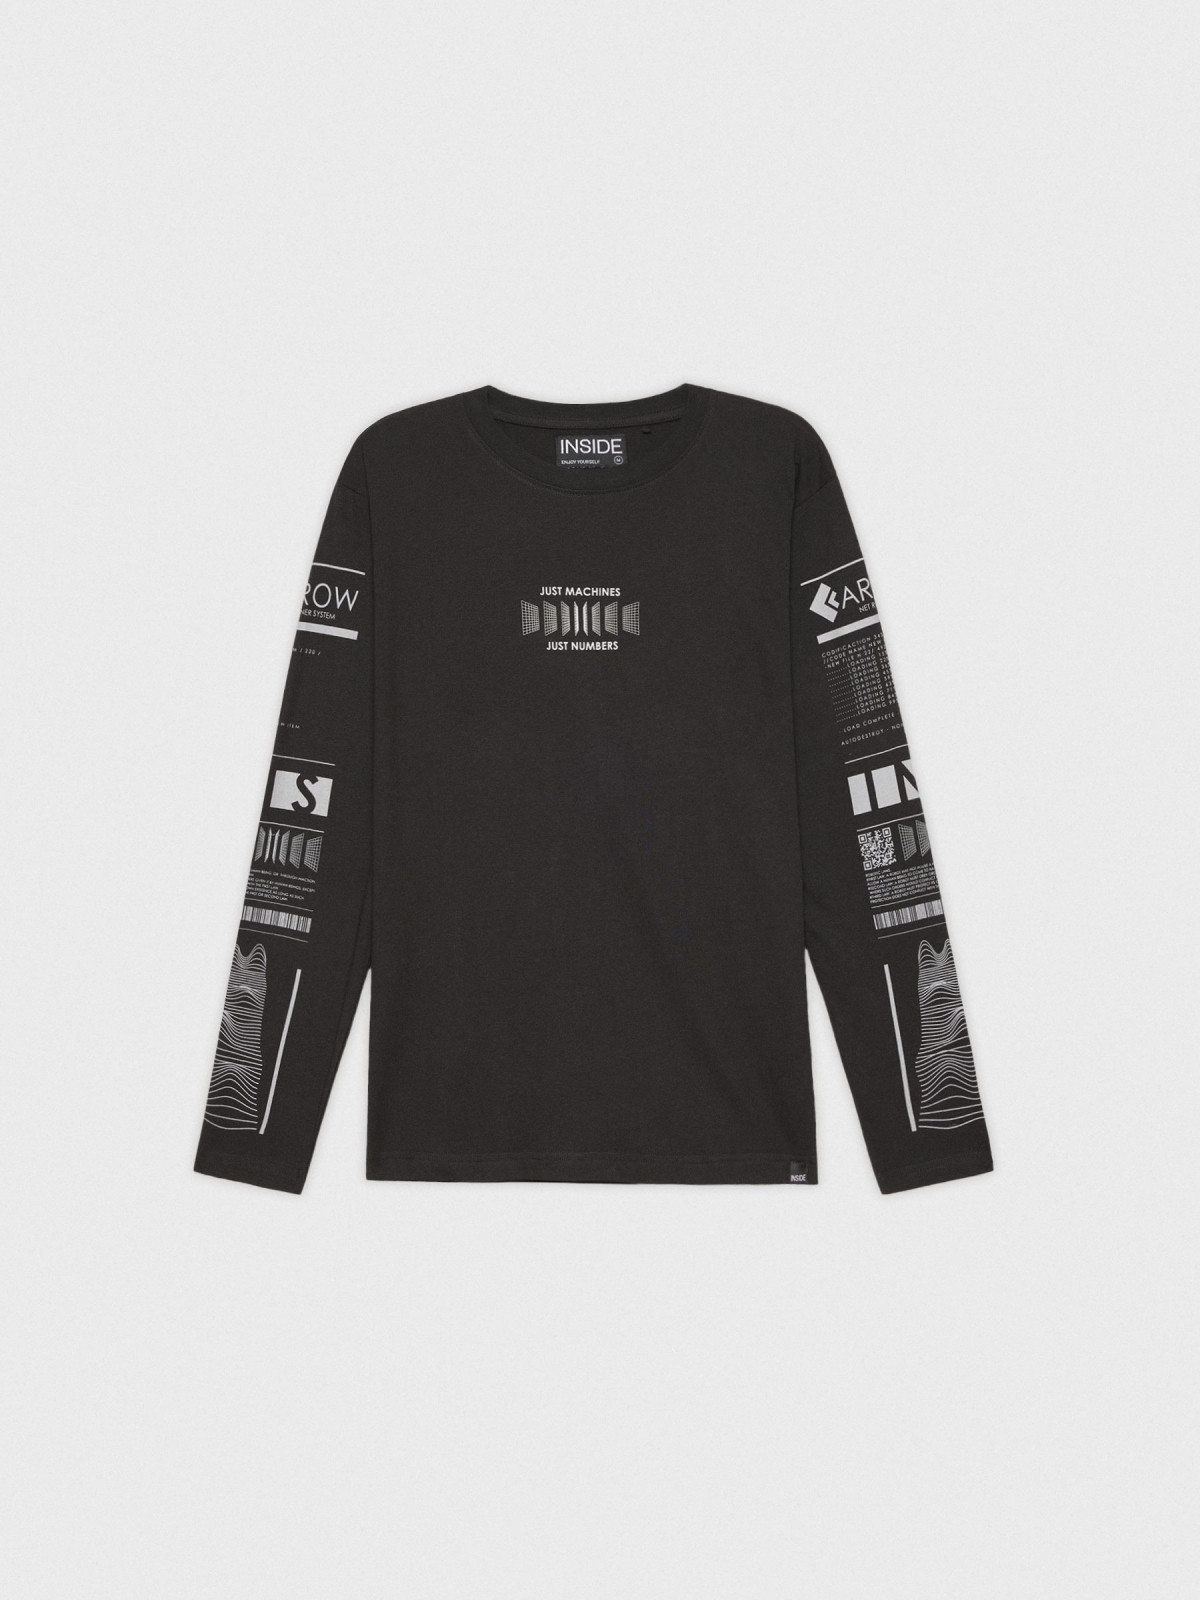  Camiseta cyber print en las mangas negro